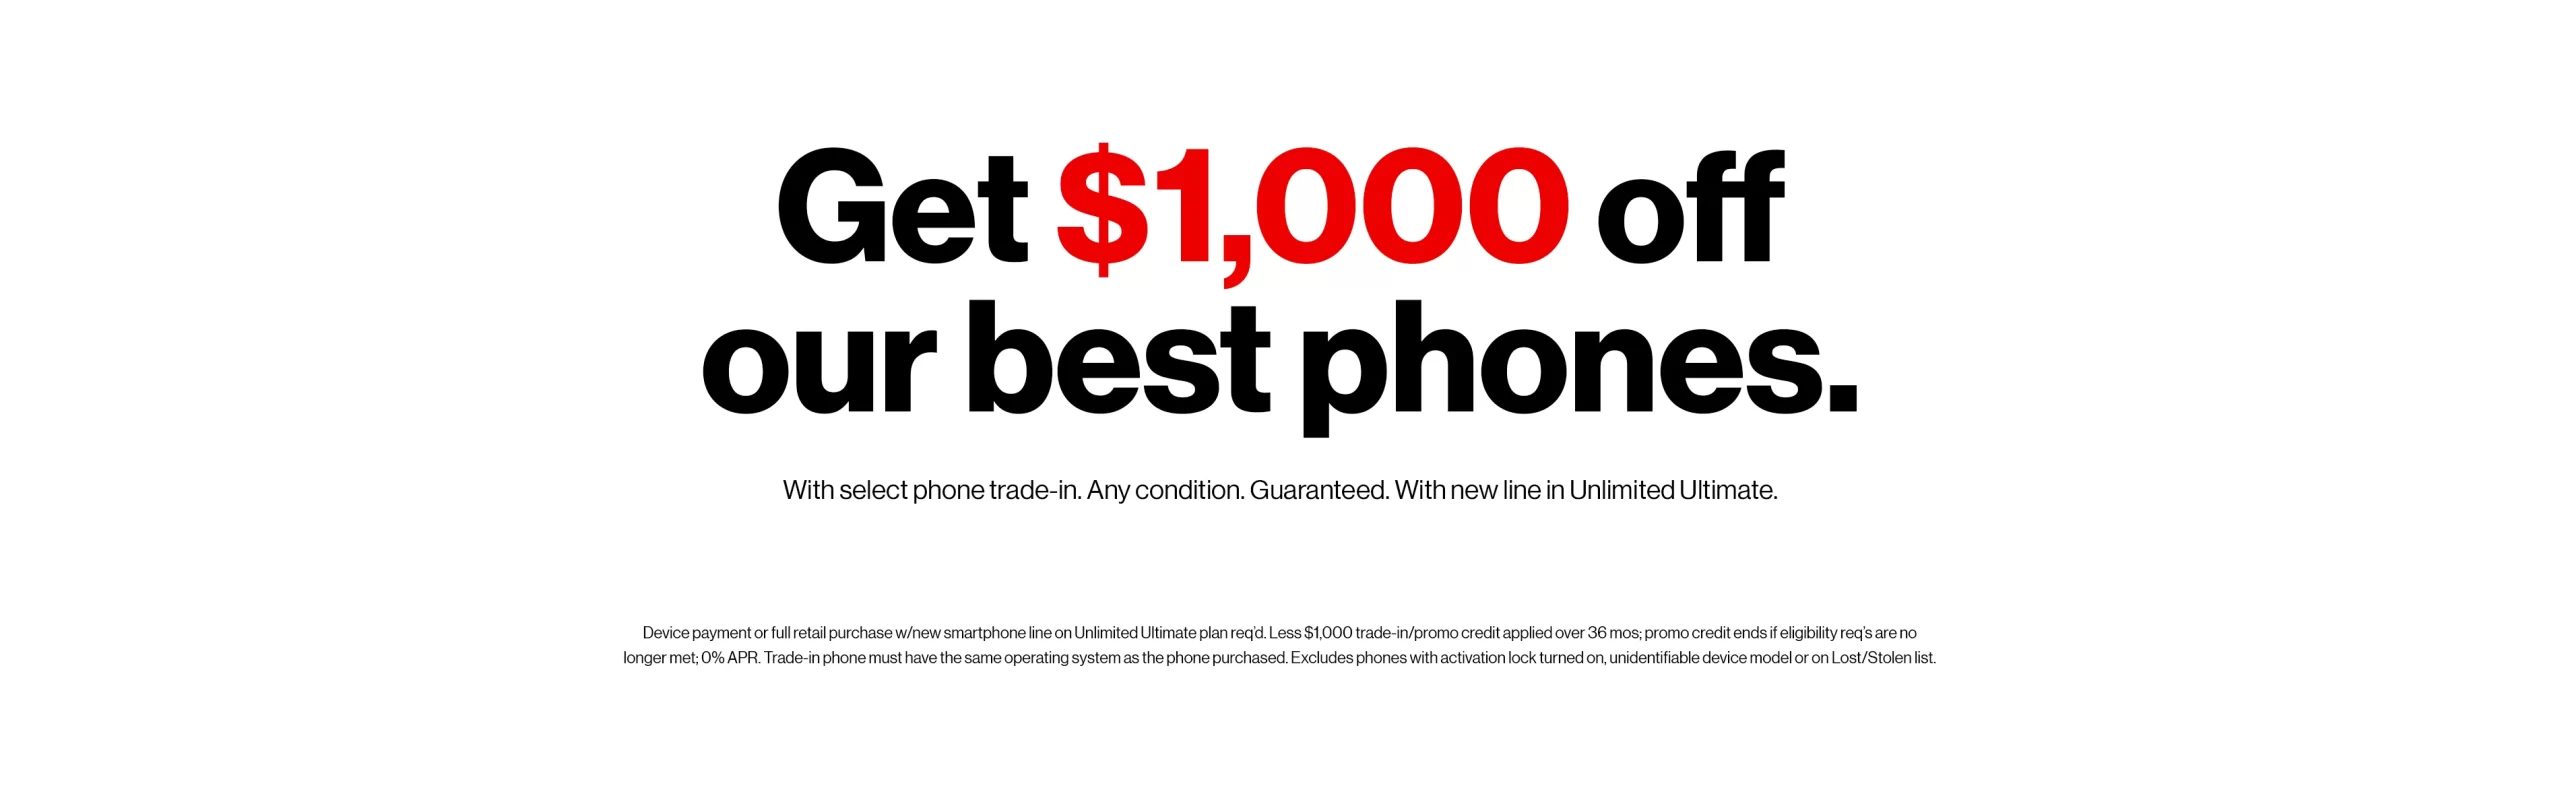 Get $1,000 off our best phones.